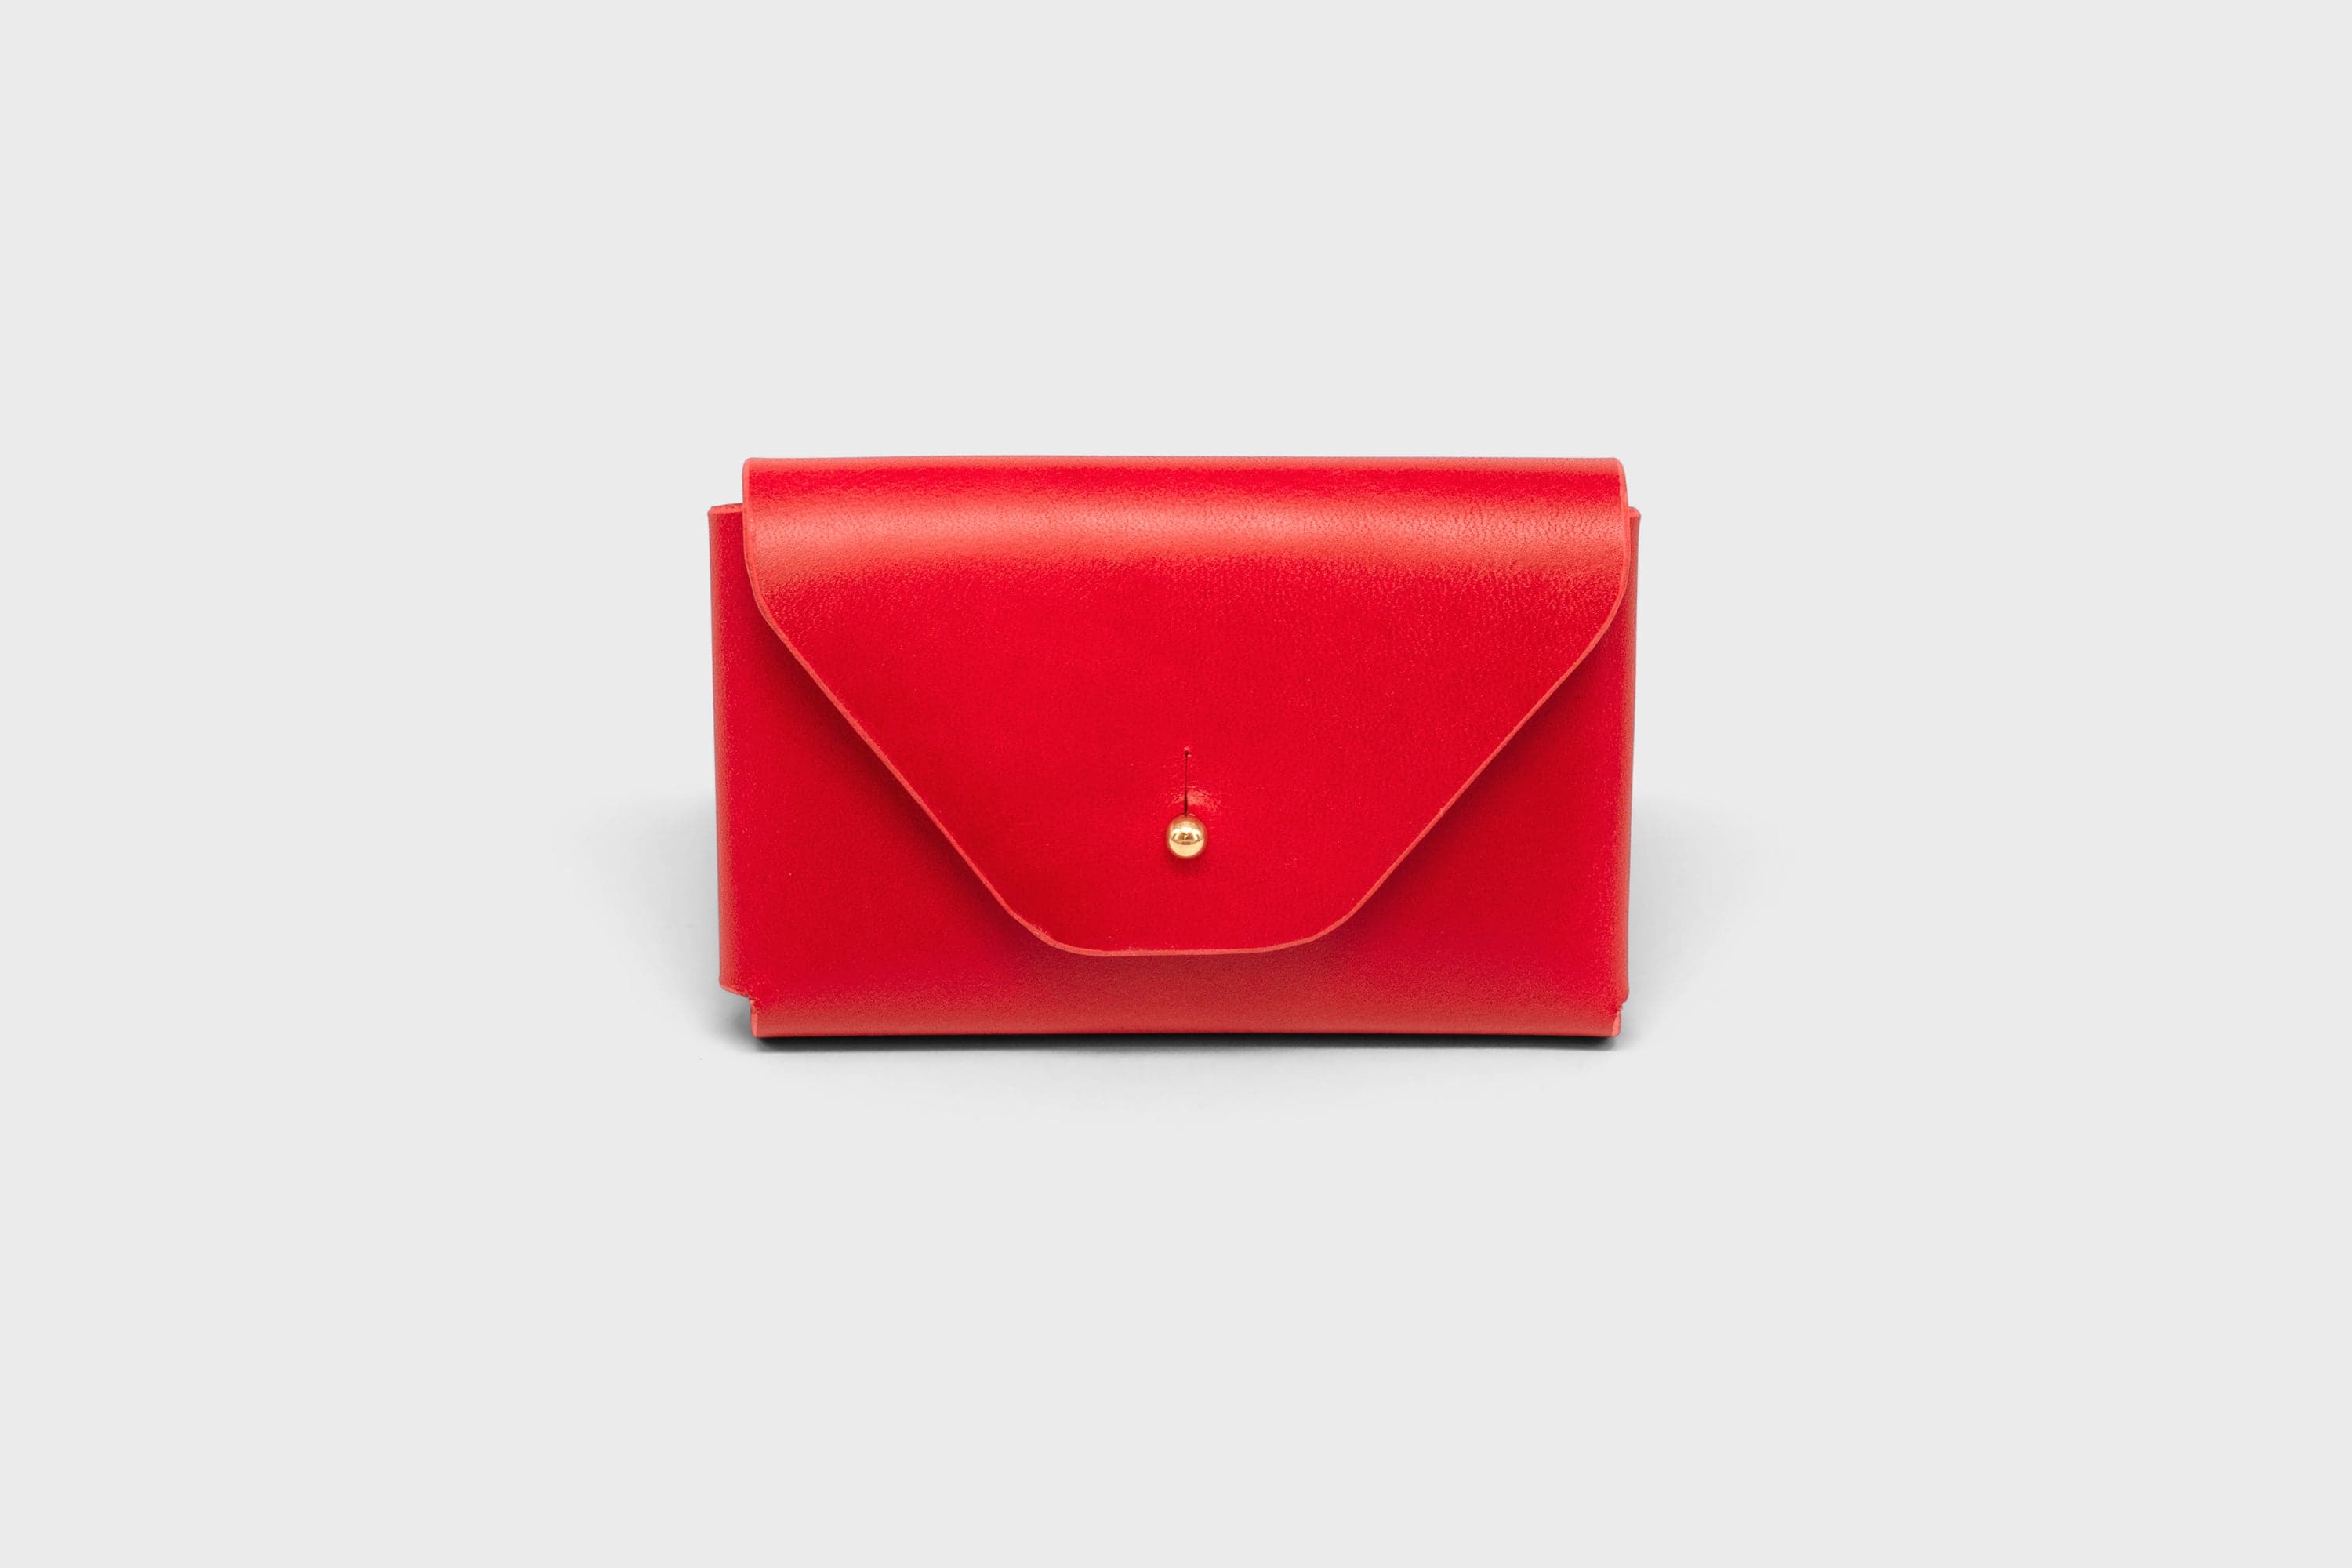 Mini Wallet Leather Red Design By Manuel Dreesmann Atelier Madre Barcelona